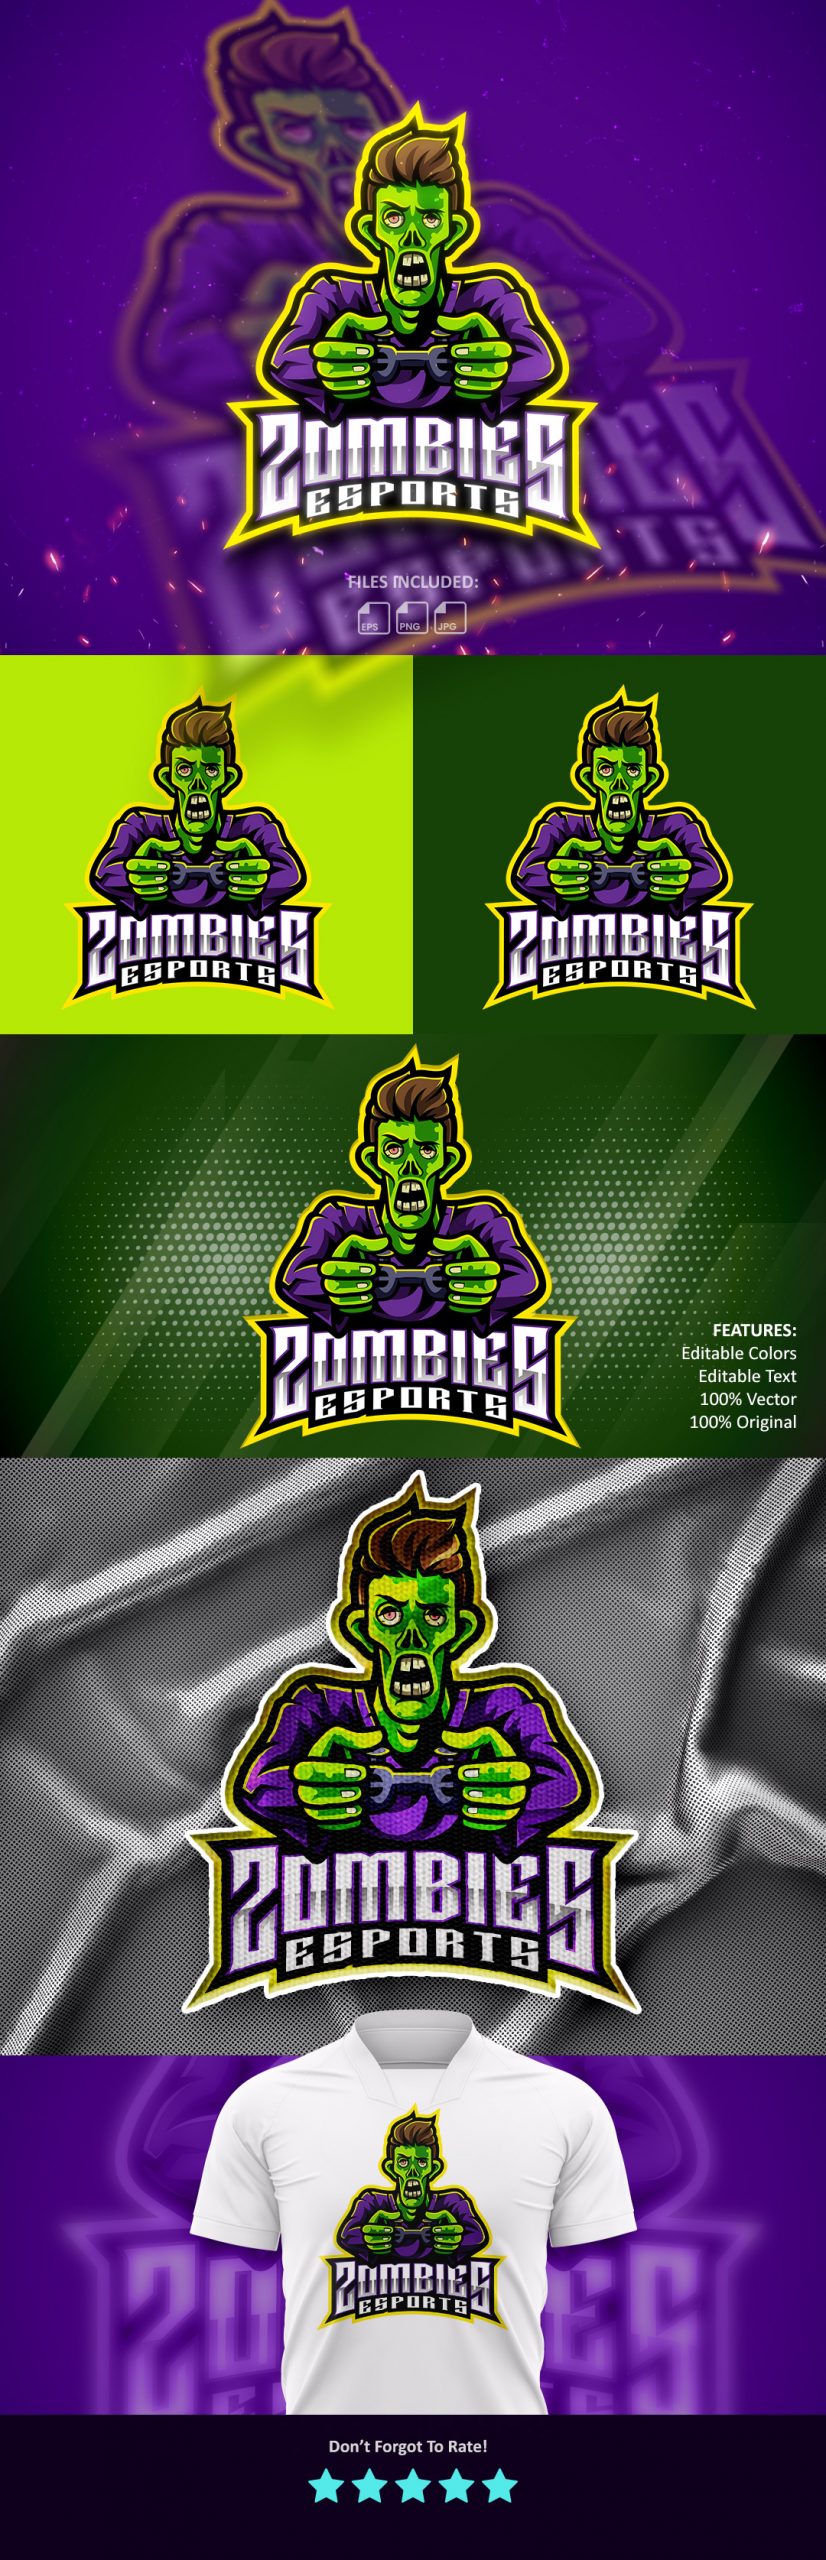 Zombies-Clan-Esports-Mascot-Logo-Free-Download